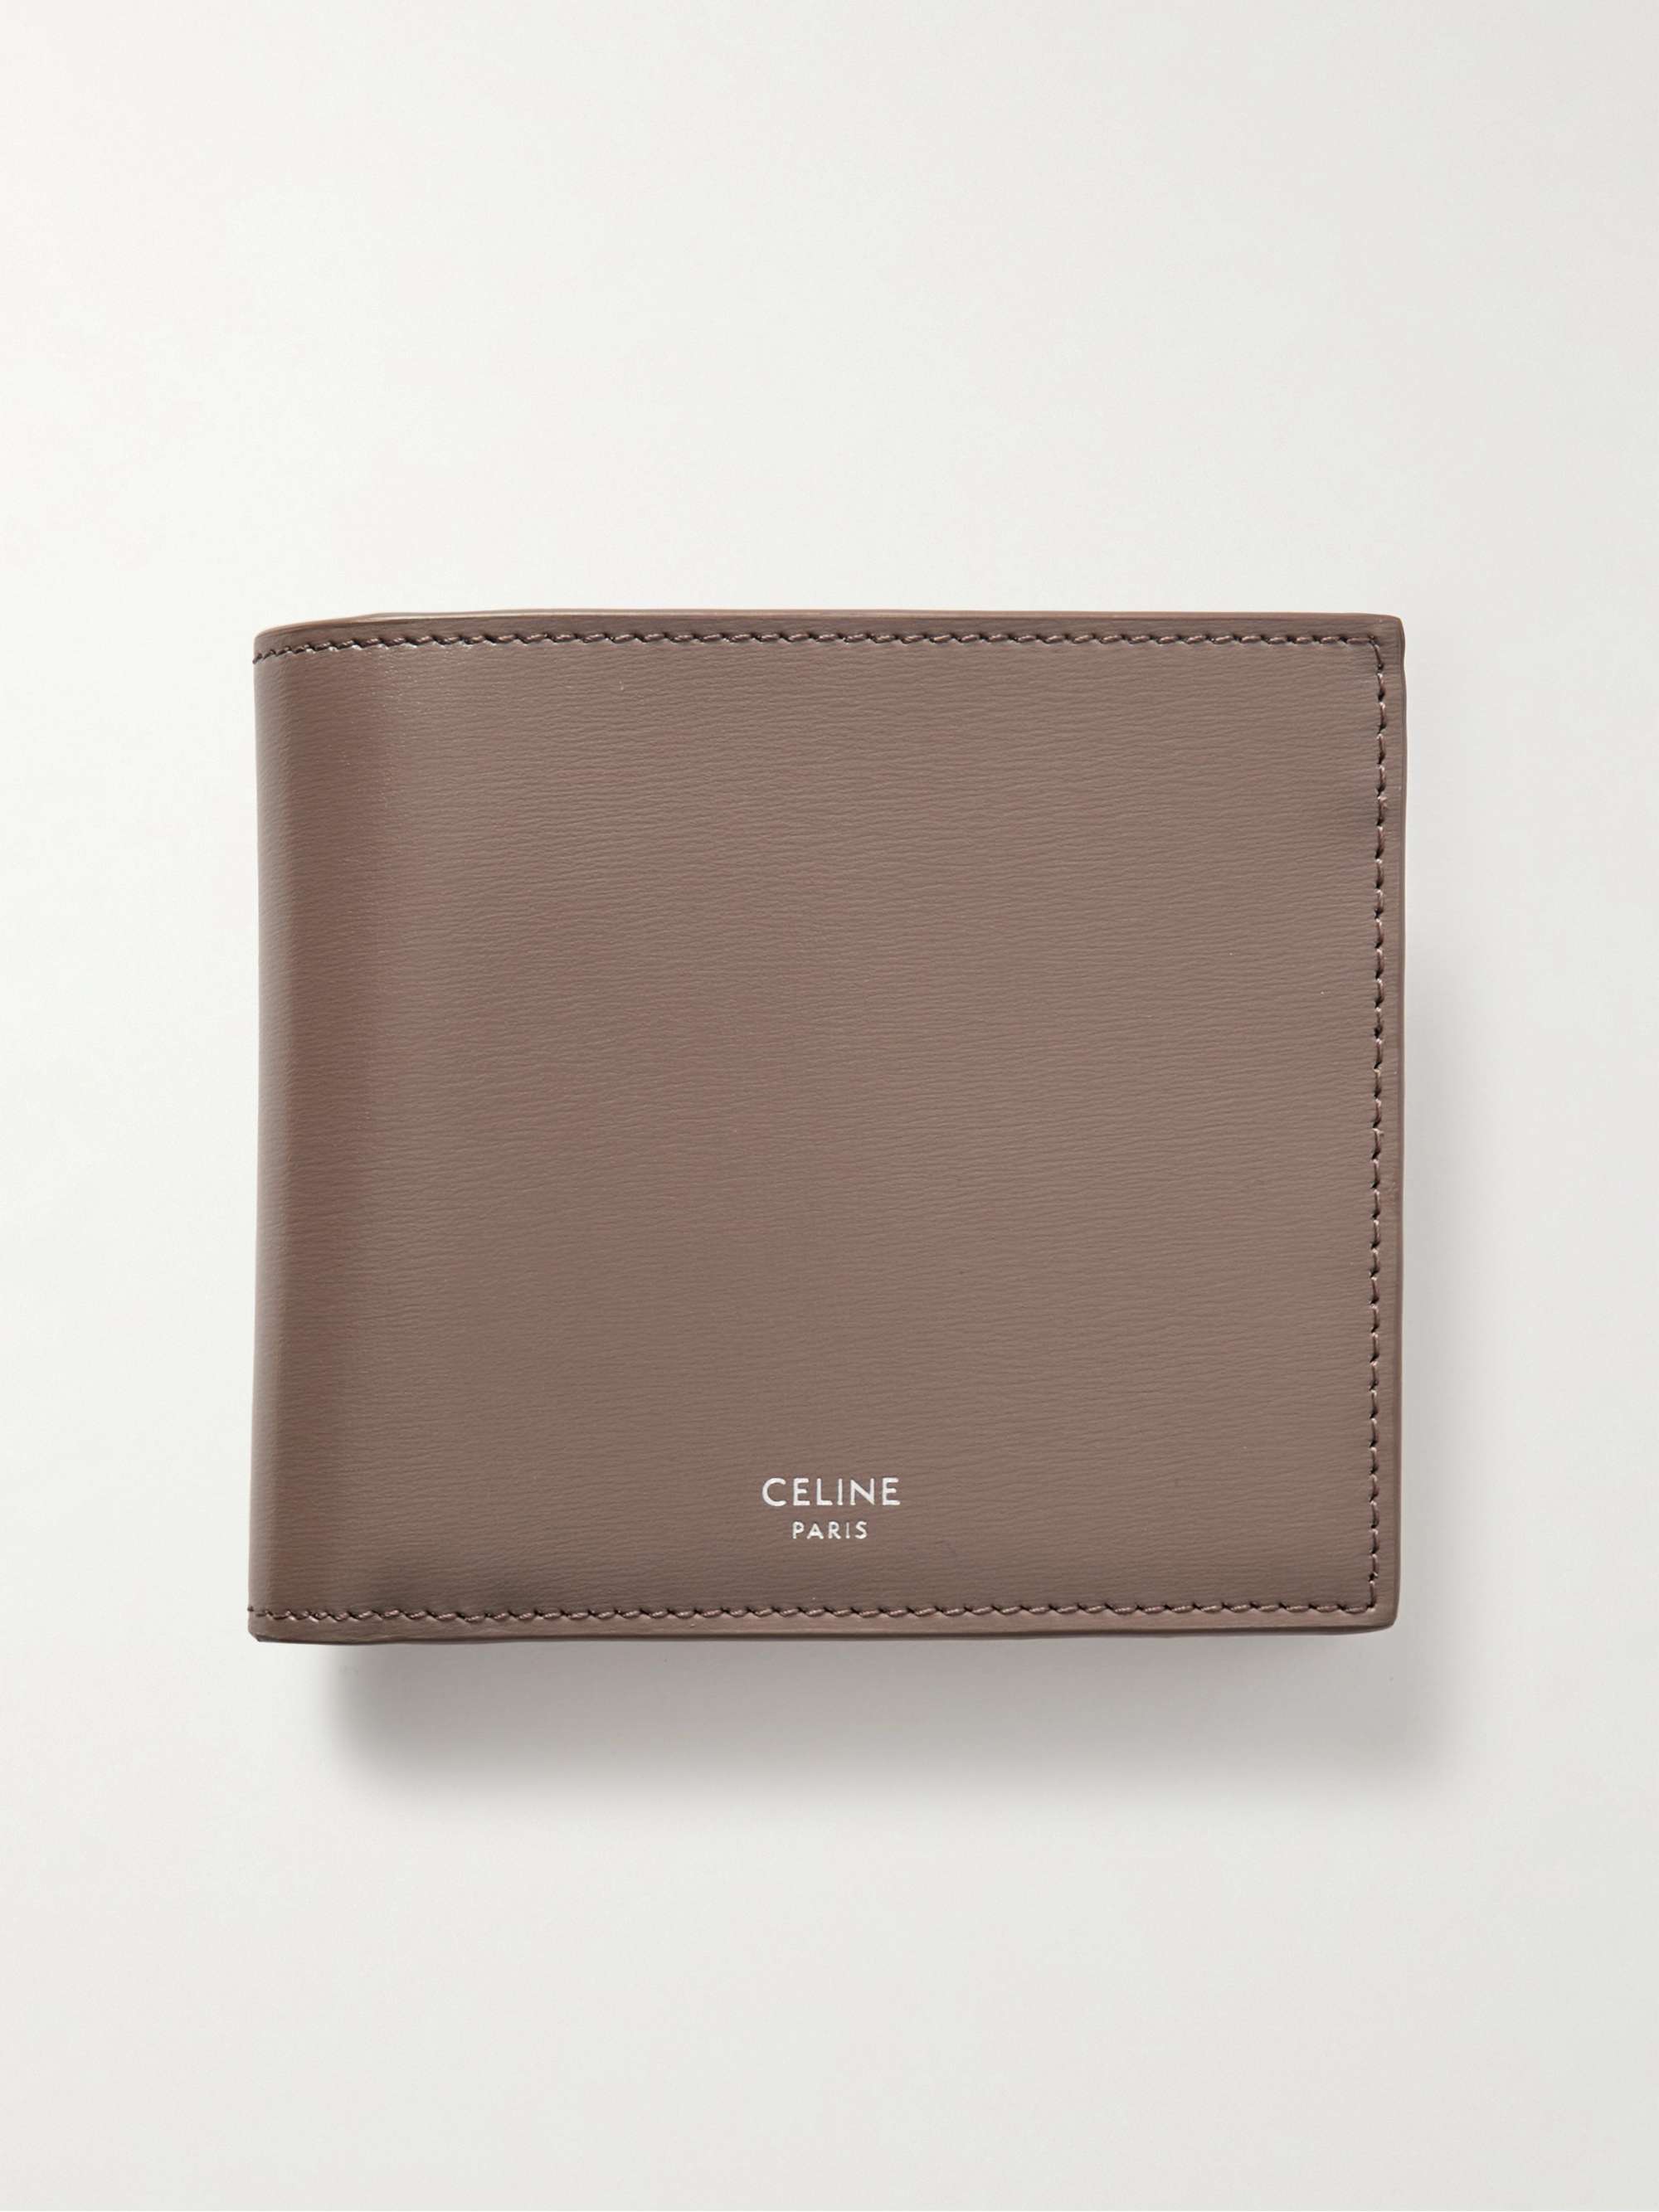 CELINE HOMME Logo-Print Leather Billfold Wallet for Men | MR PORTER